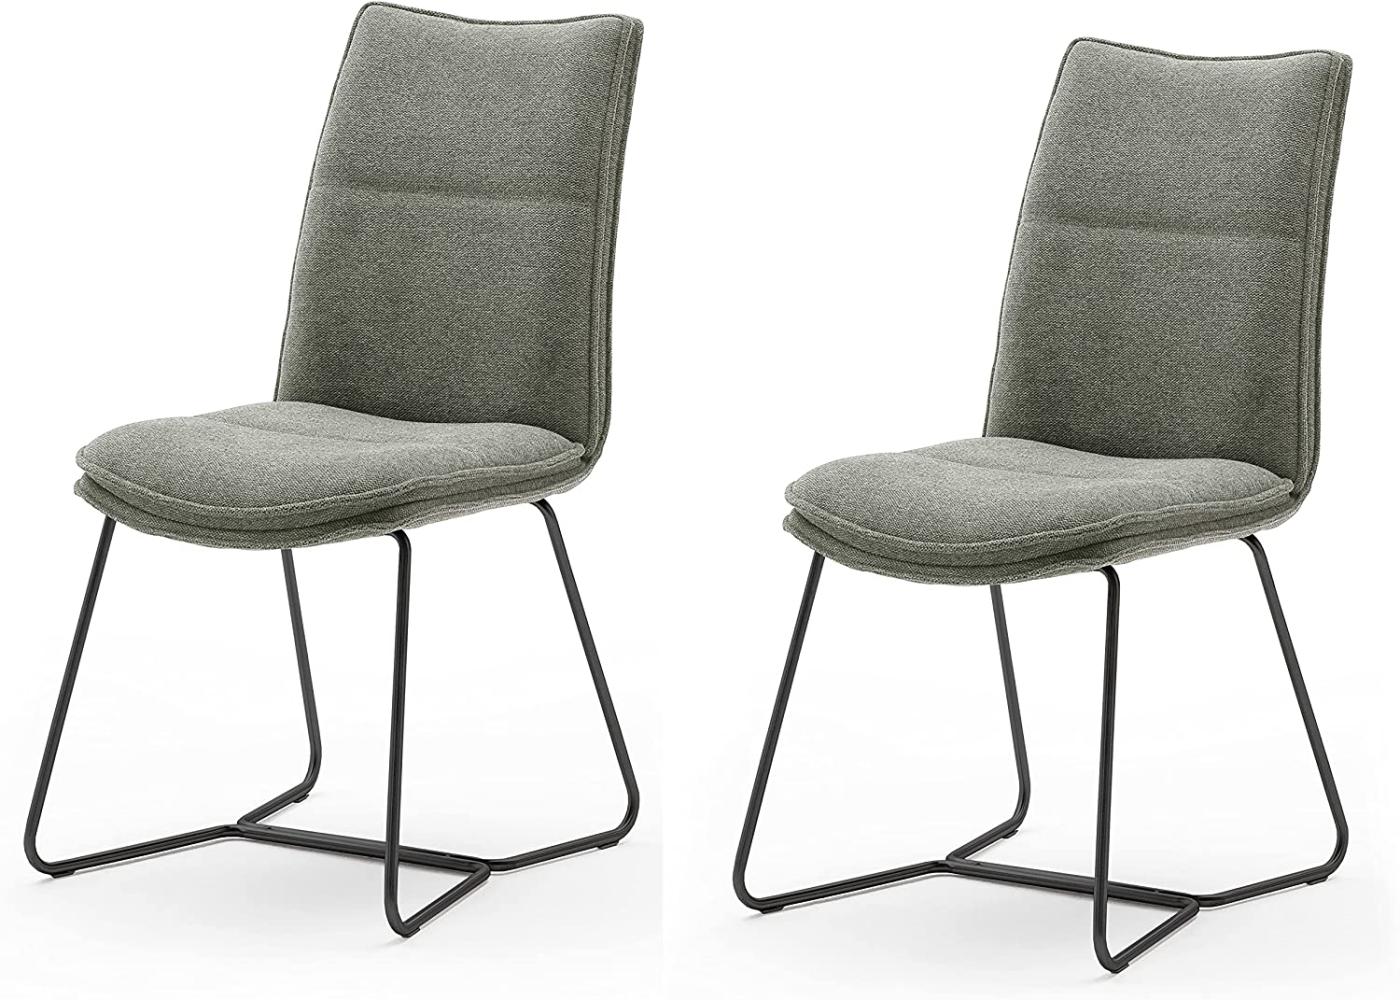 2 x Stuhl Hampton olive Kufengestell Metall schwarz lackiert Bild 1